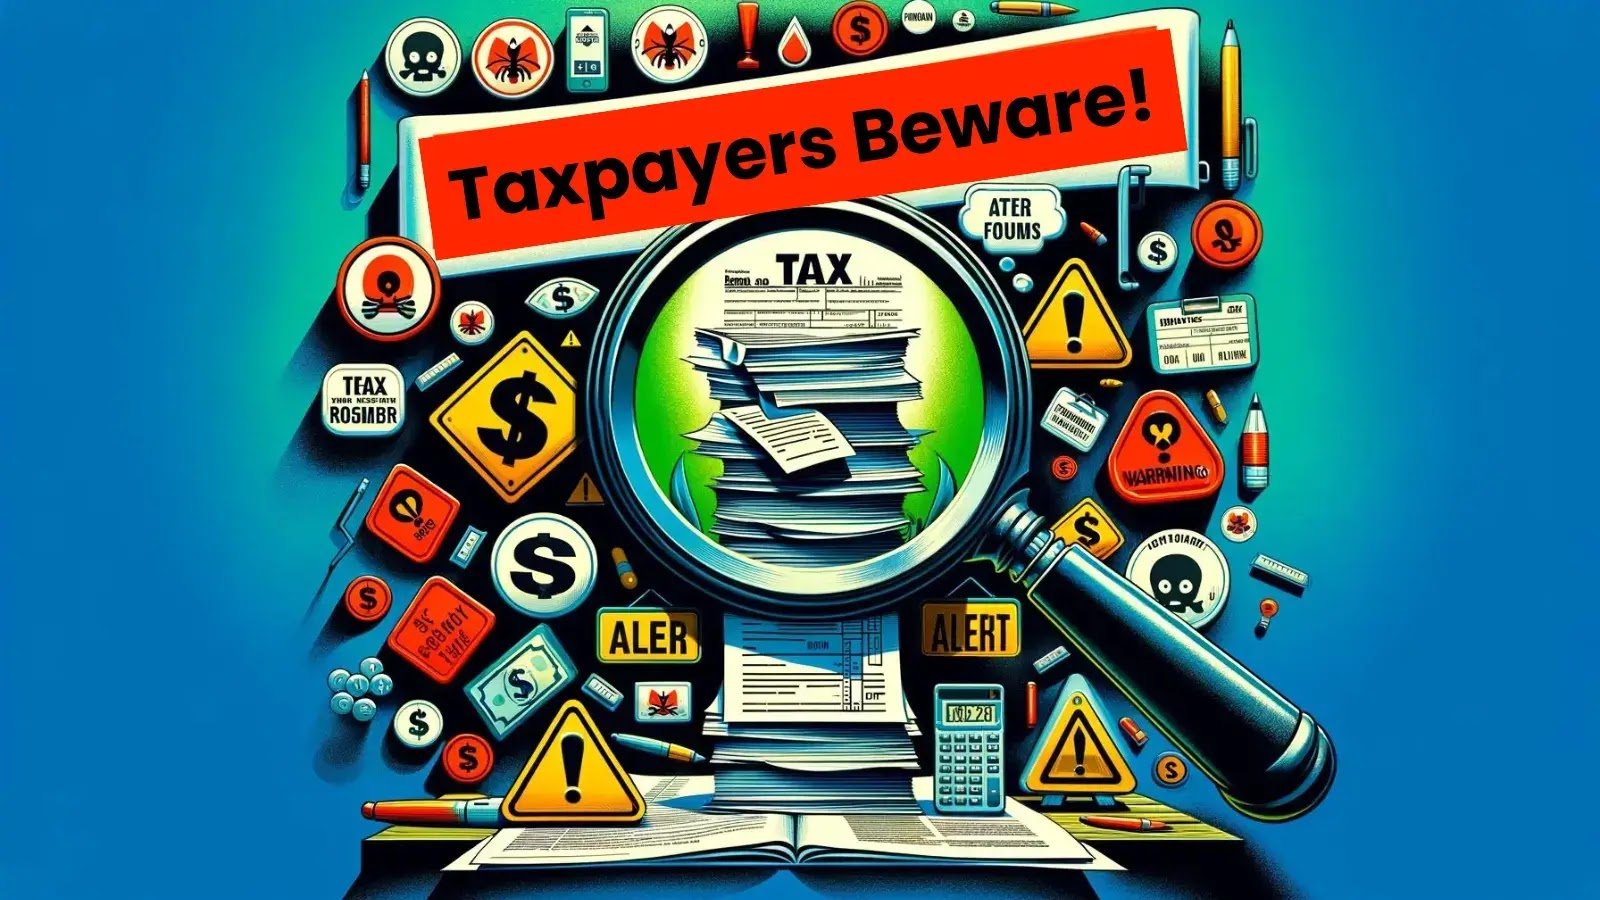 taxpayers beware